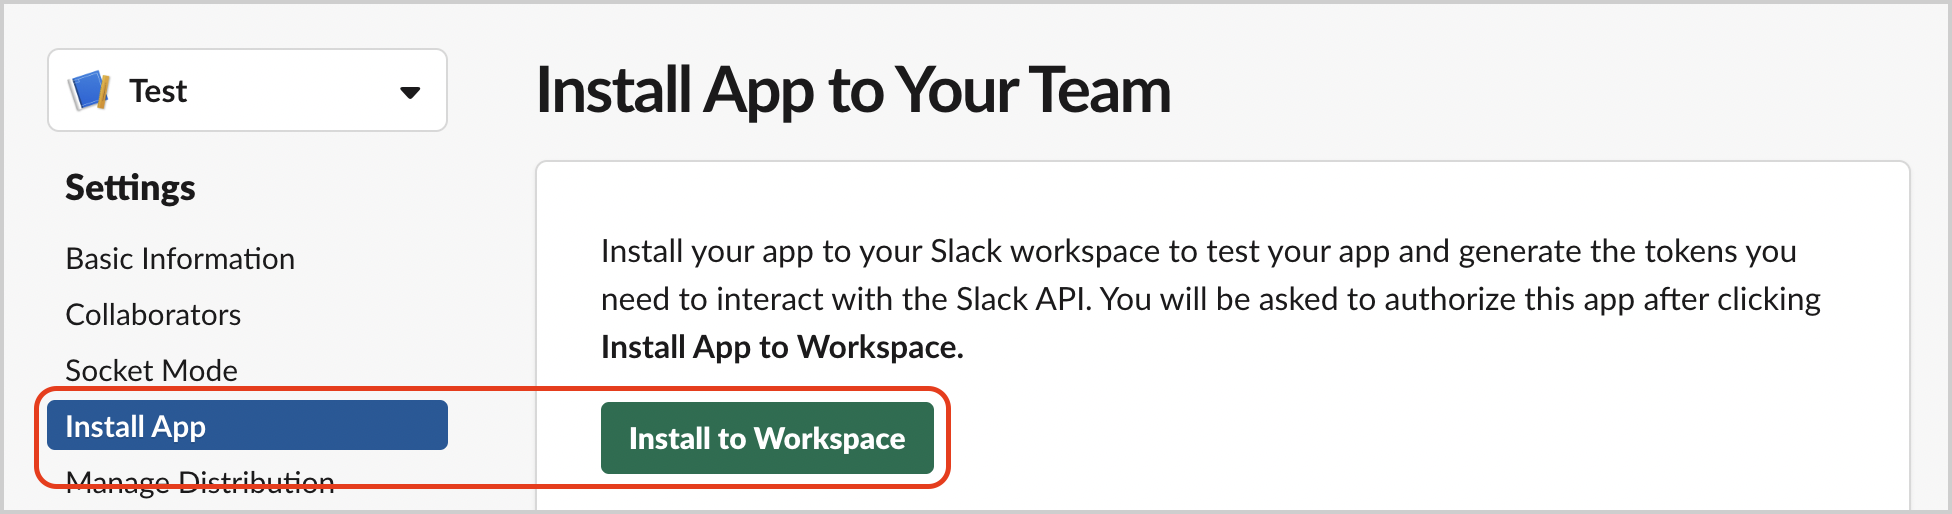 slack-install-app-to-workspace.png